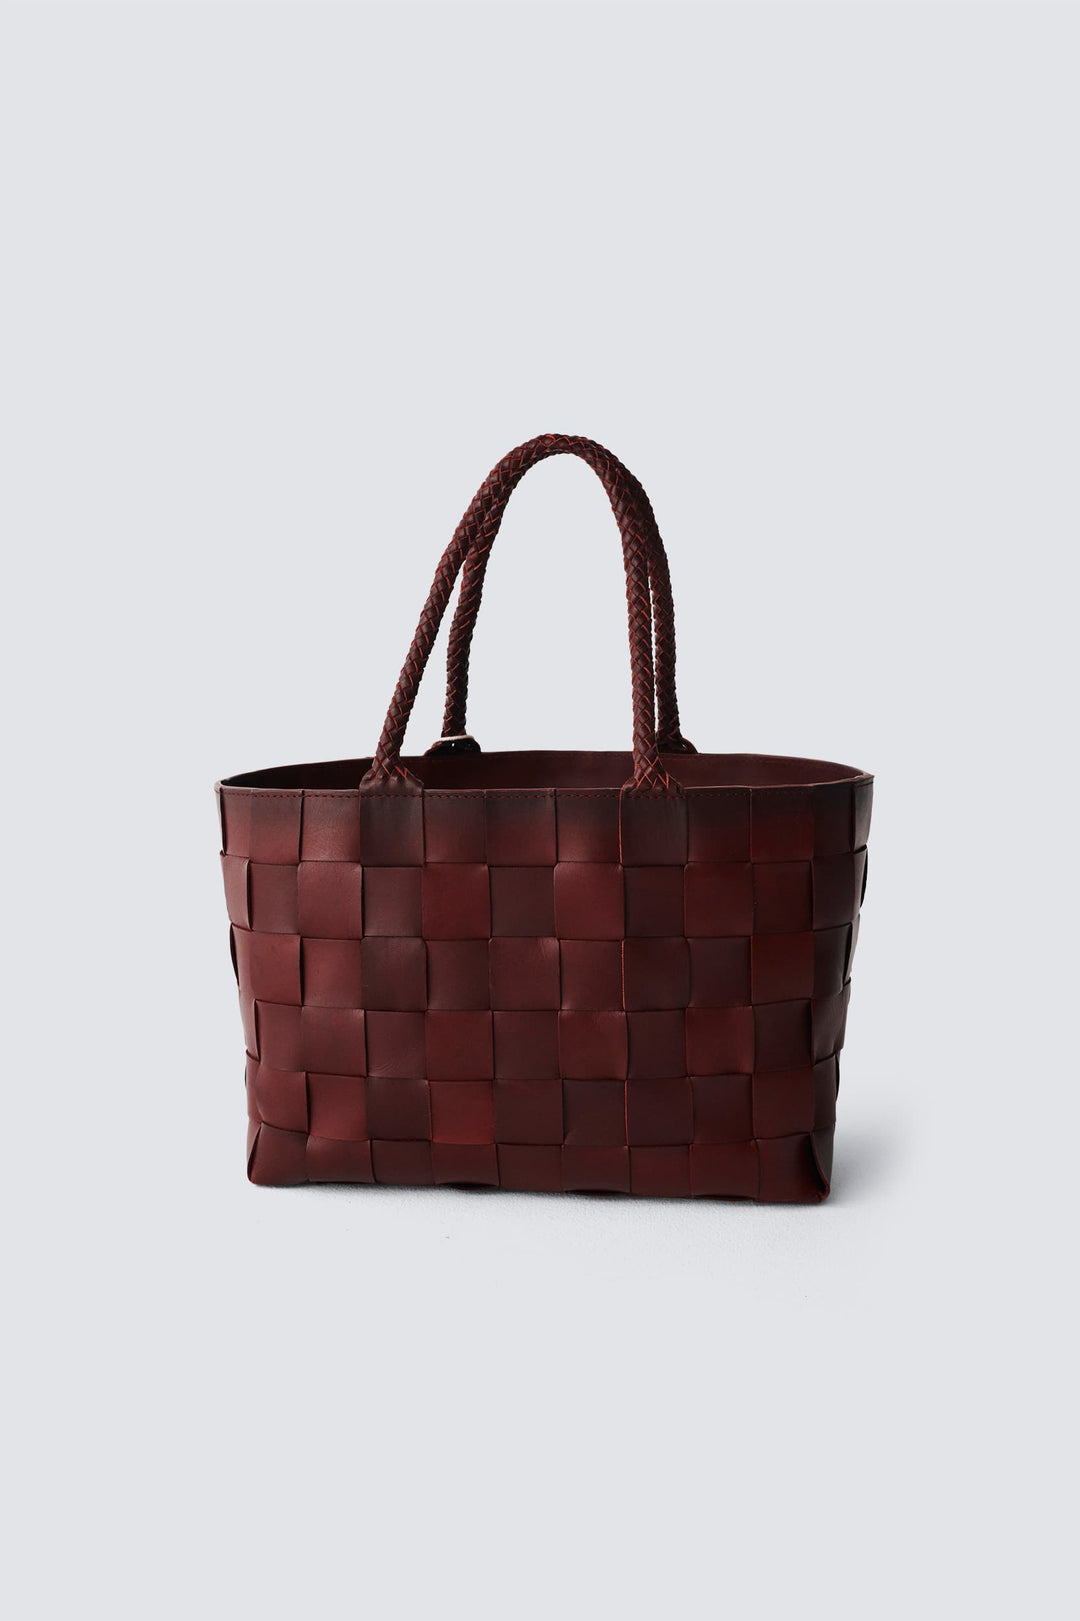 Dragon Diffusion woven leather bag handmade - Japan Tote w/ woven handles Bordo